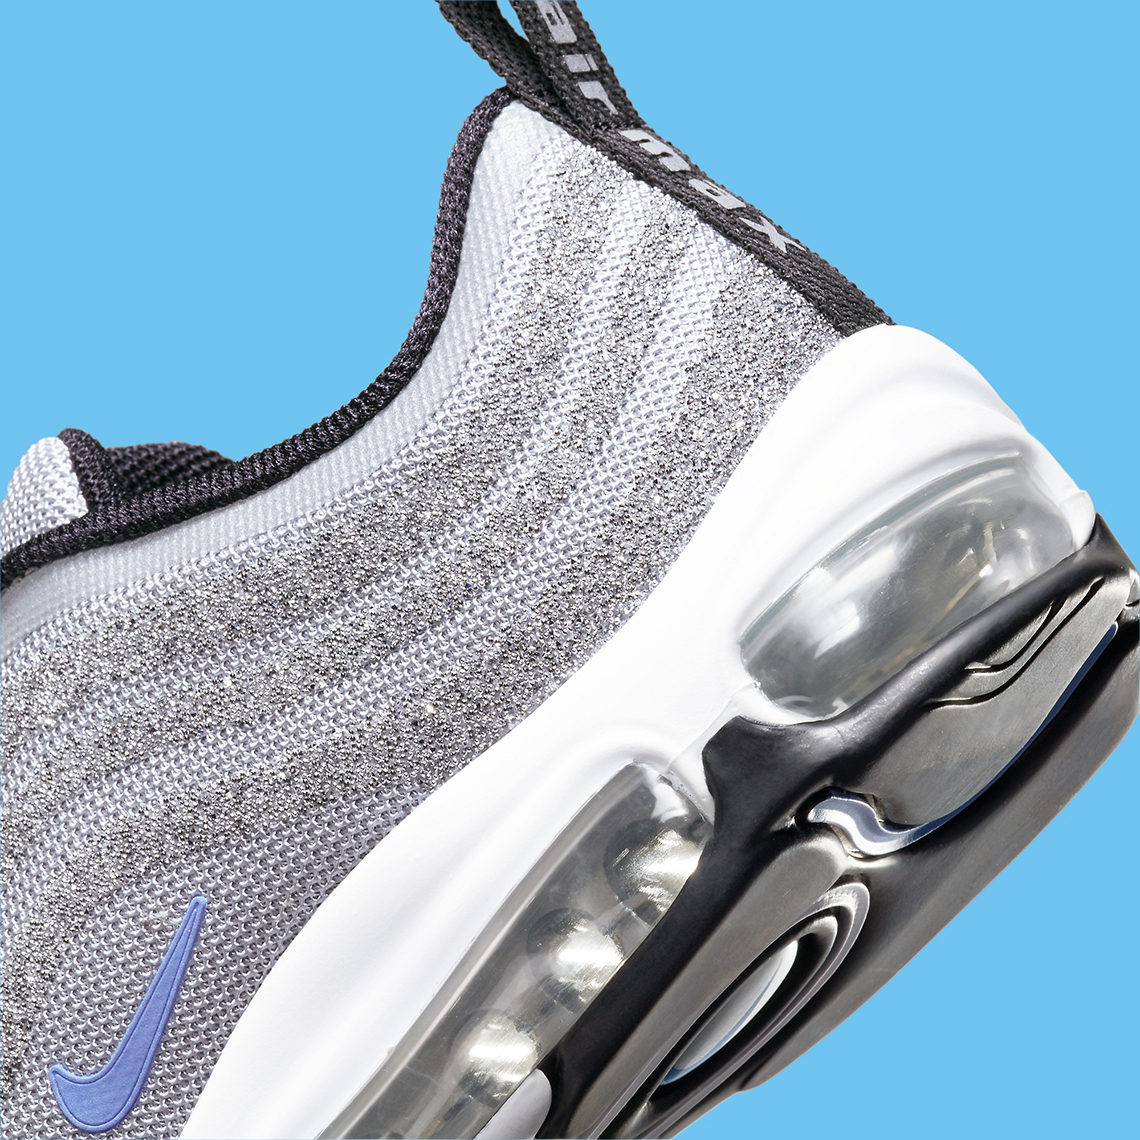 Nike Air Max 97 Swarovski Silver Blue Release Info | SneakerNews.com